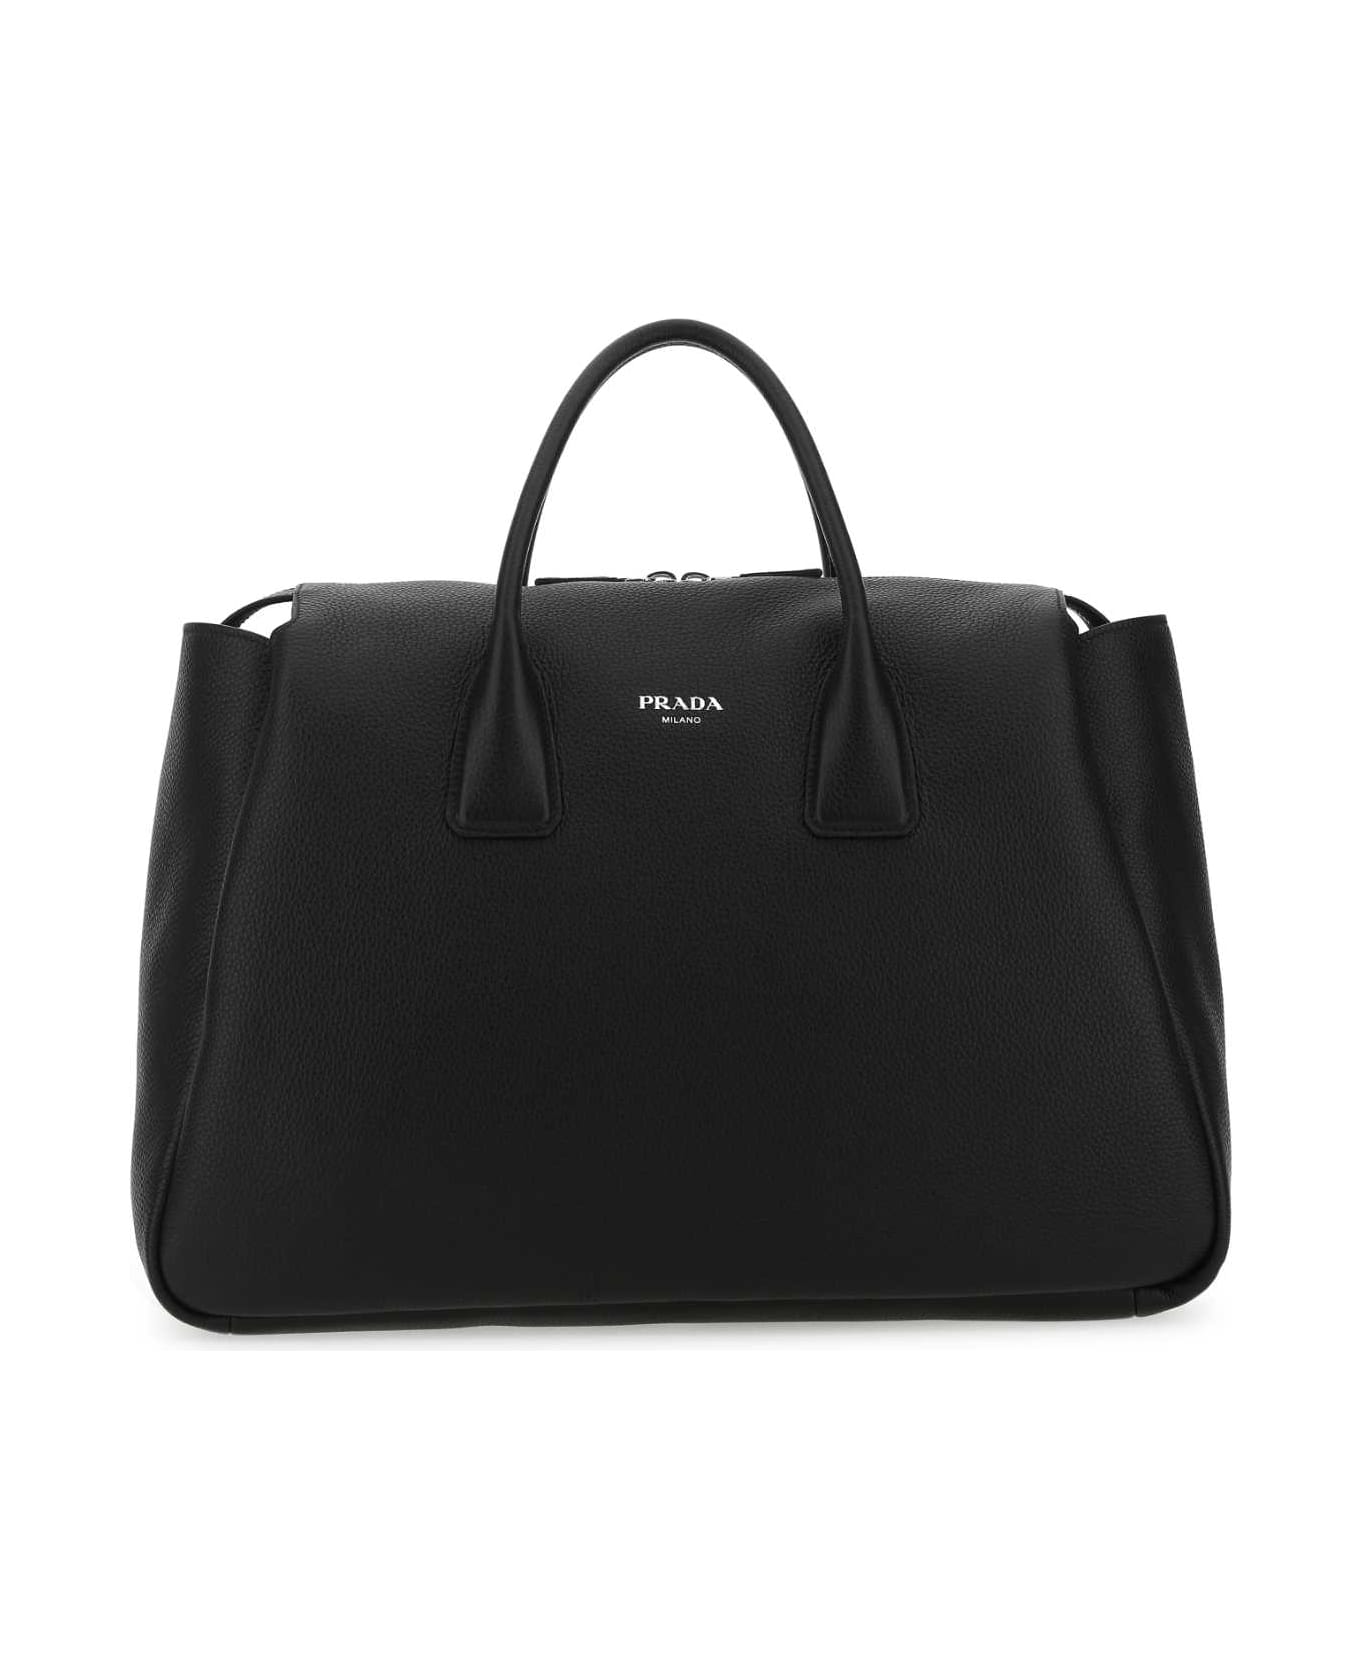 Prada Black Leather Travel Bag - F0002